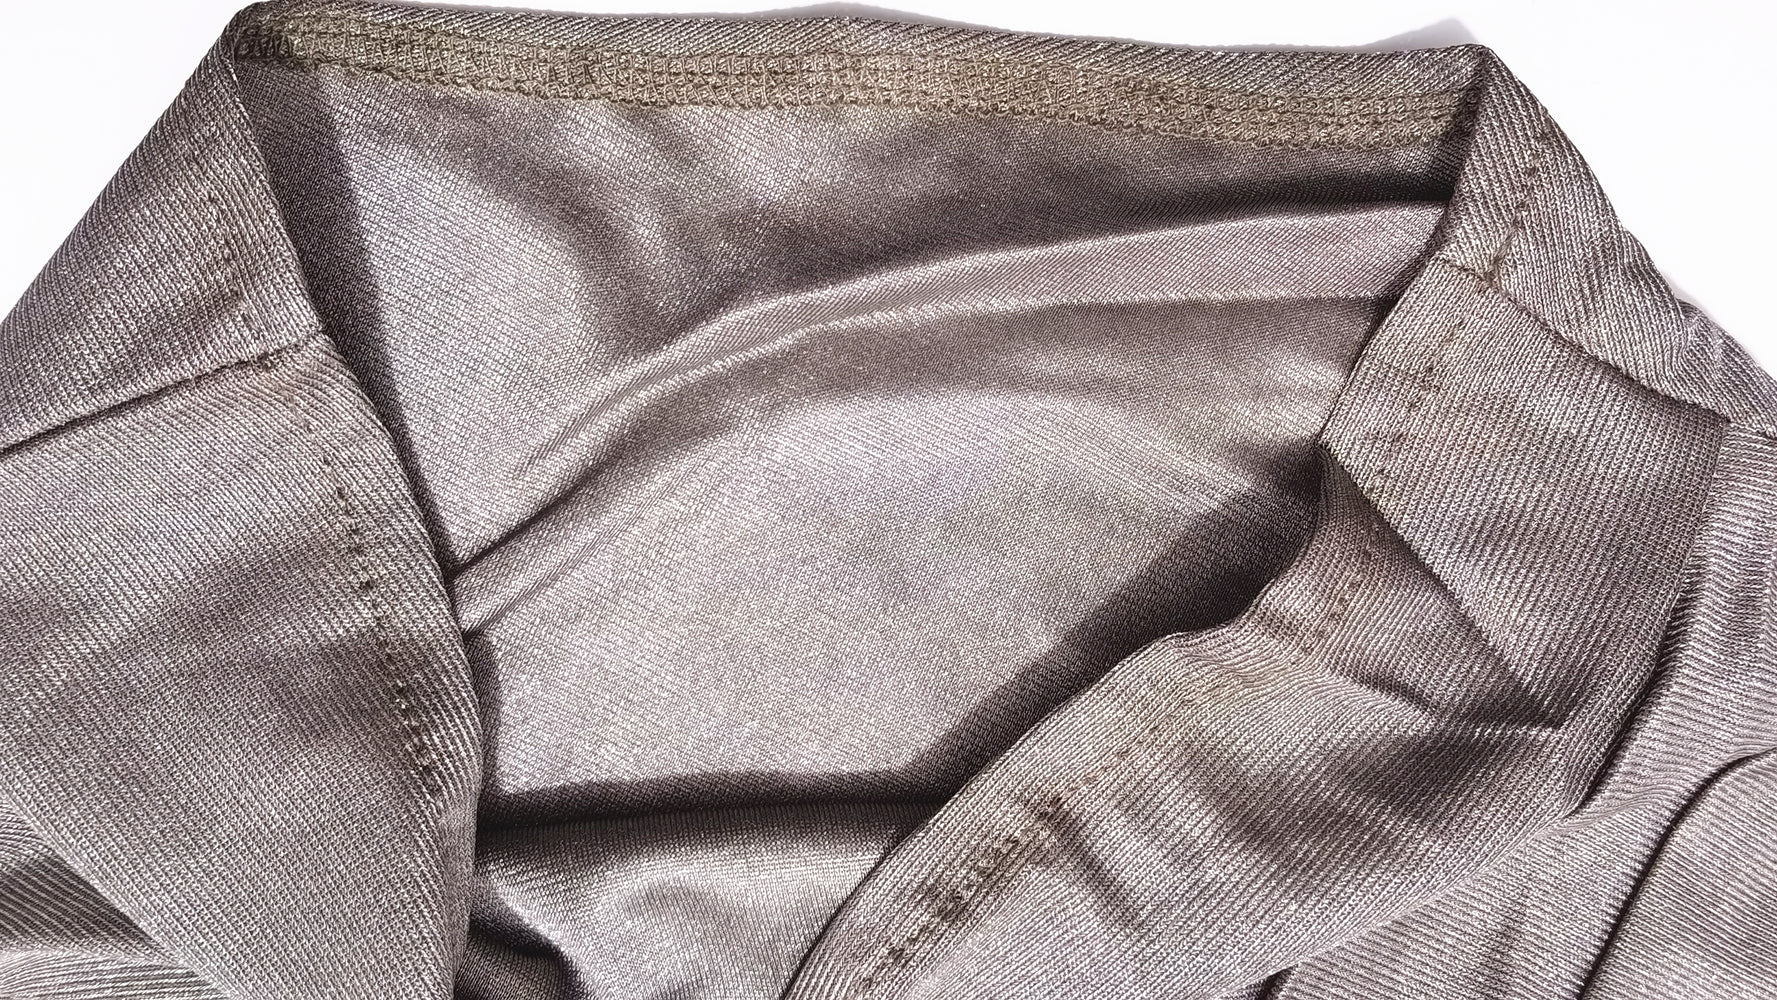 Faraday Boxer Briefs-Anti-Radiation EMF Shielding Shorts Silver Pants Breathable